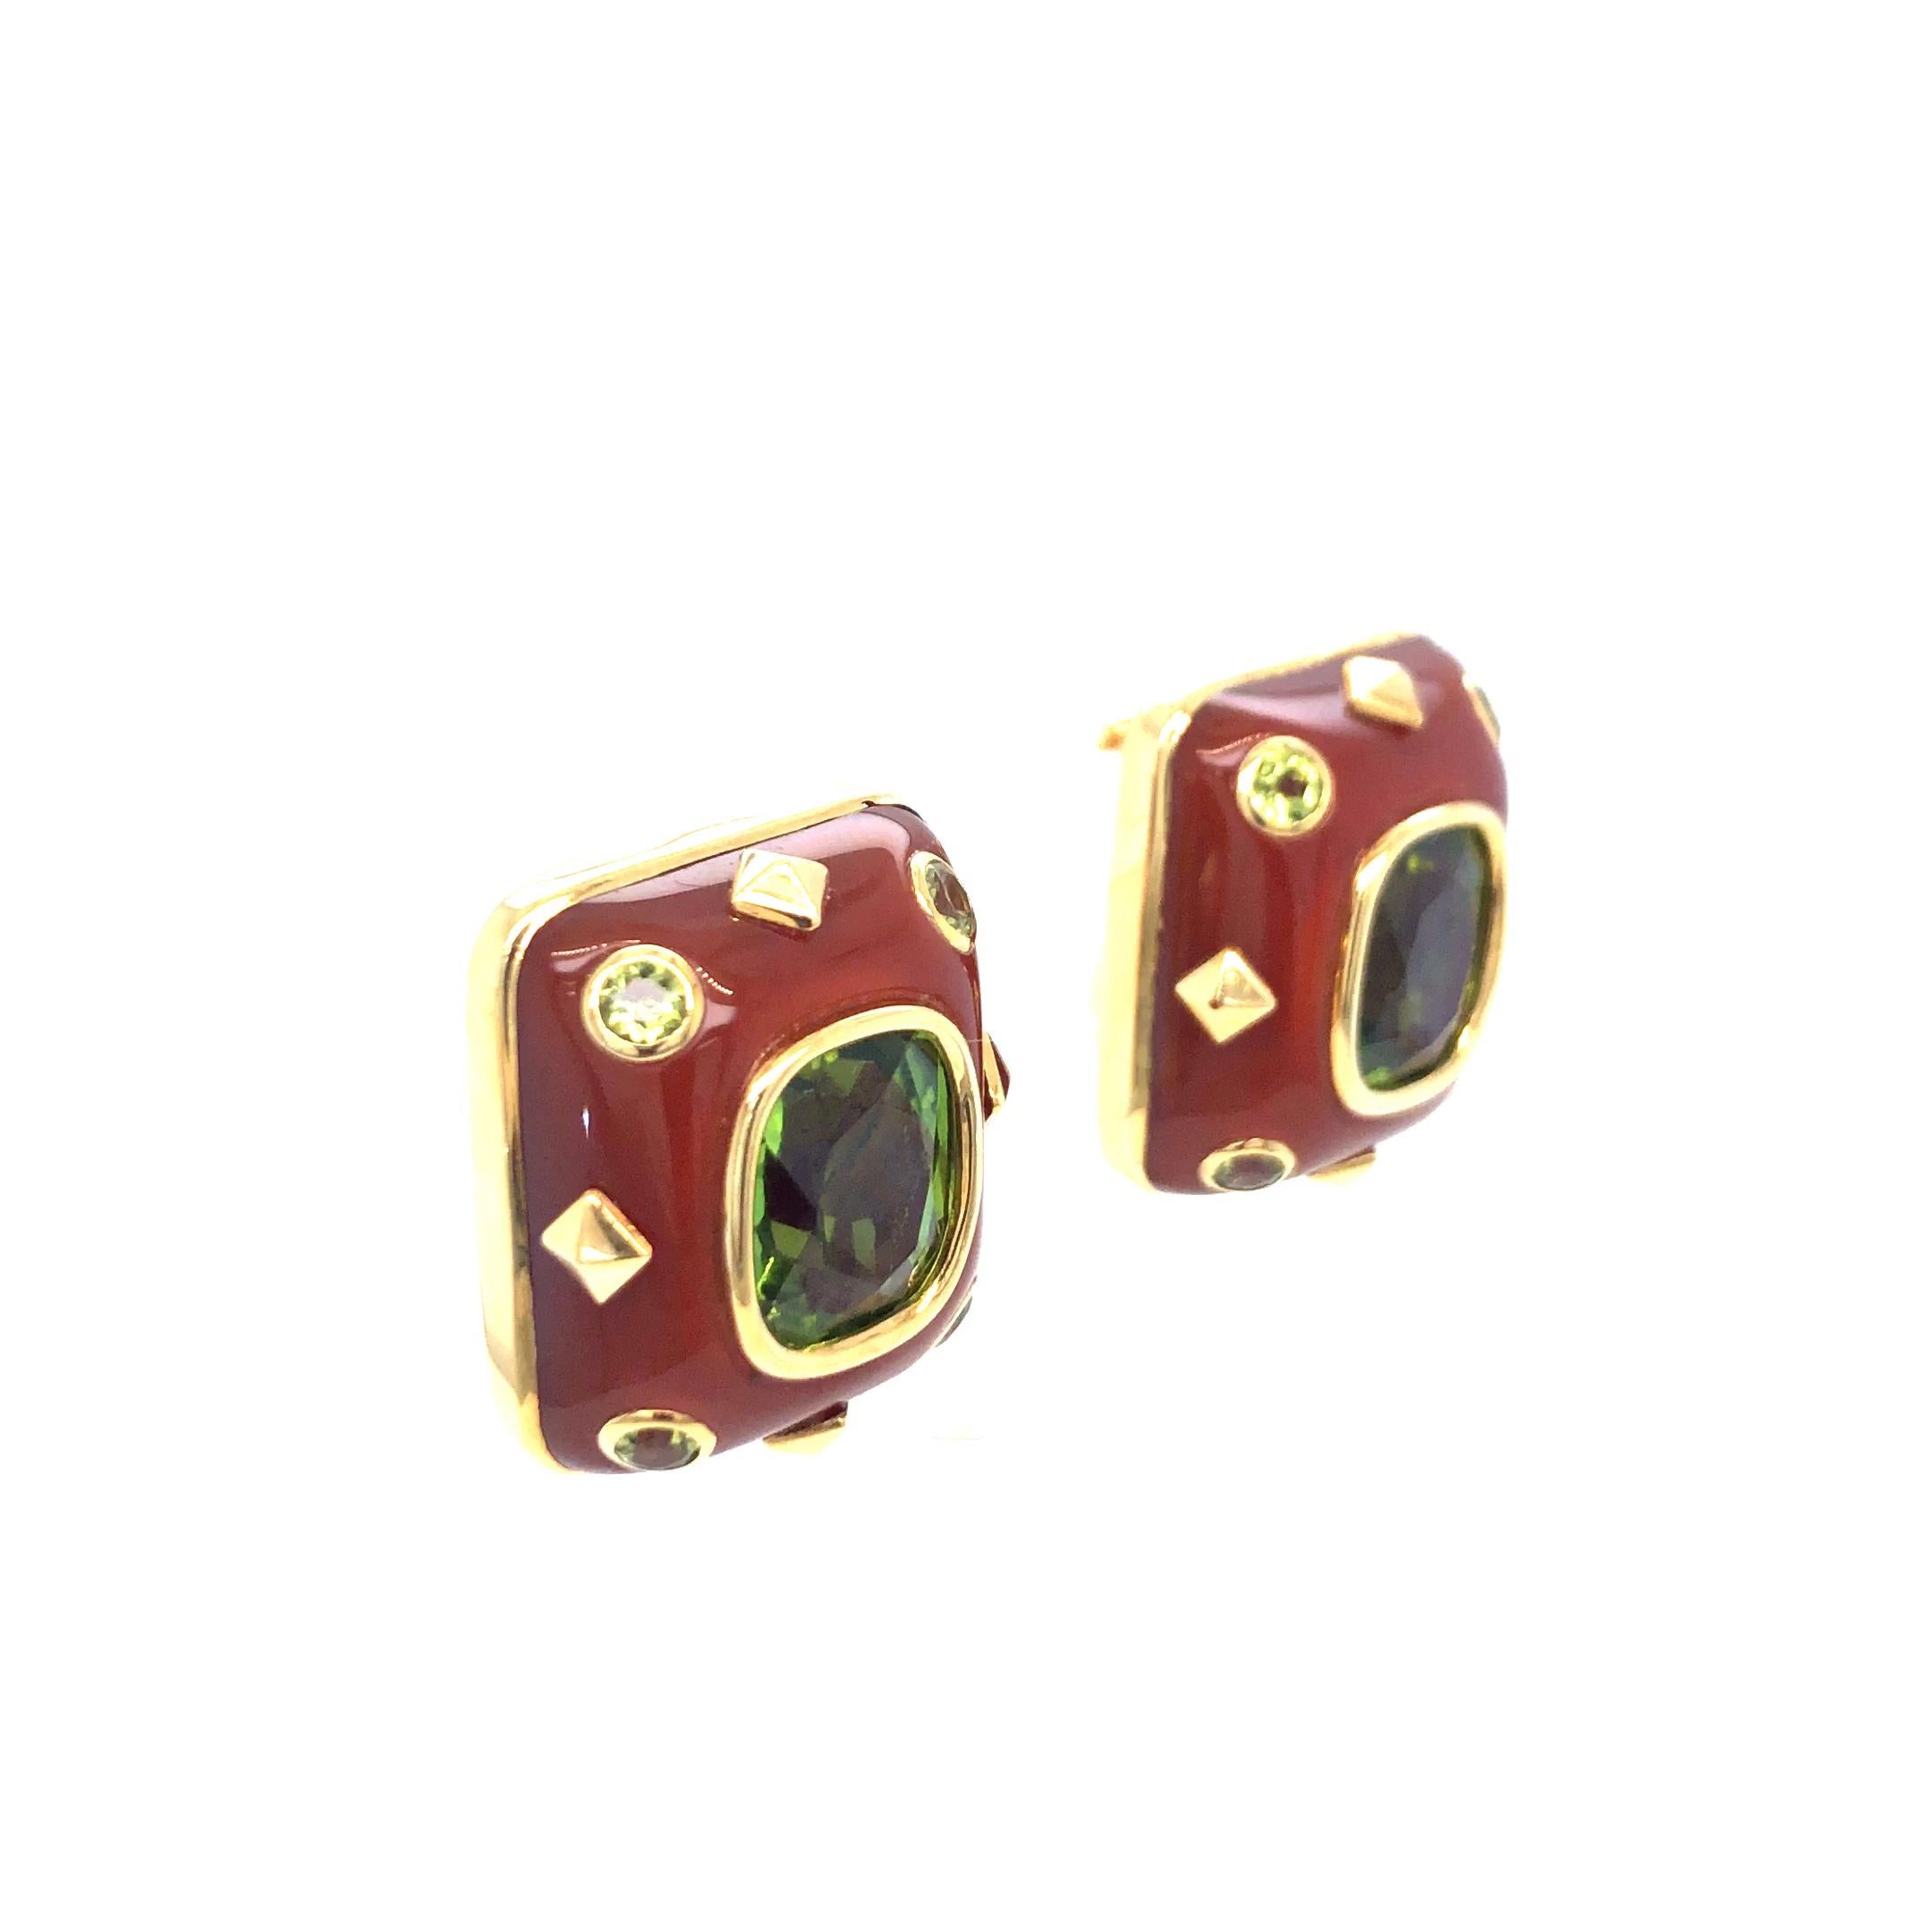 Trianon Peridot & Carnelian Clip-On Earrings 18K Yellow Gold.
1